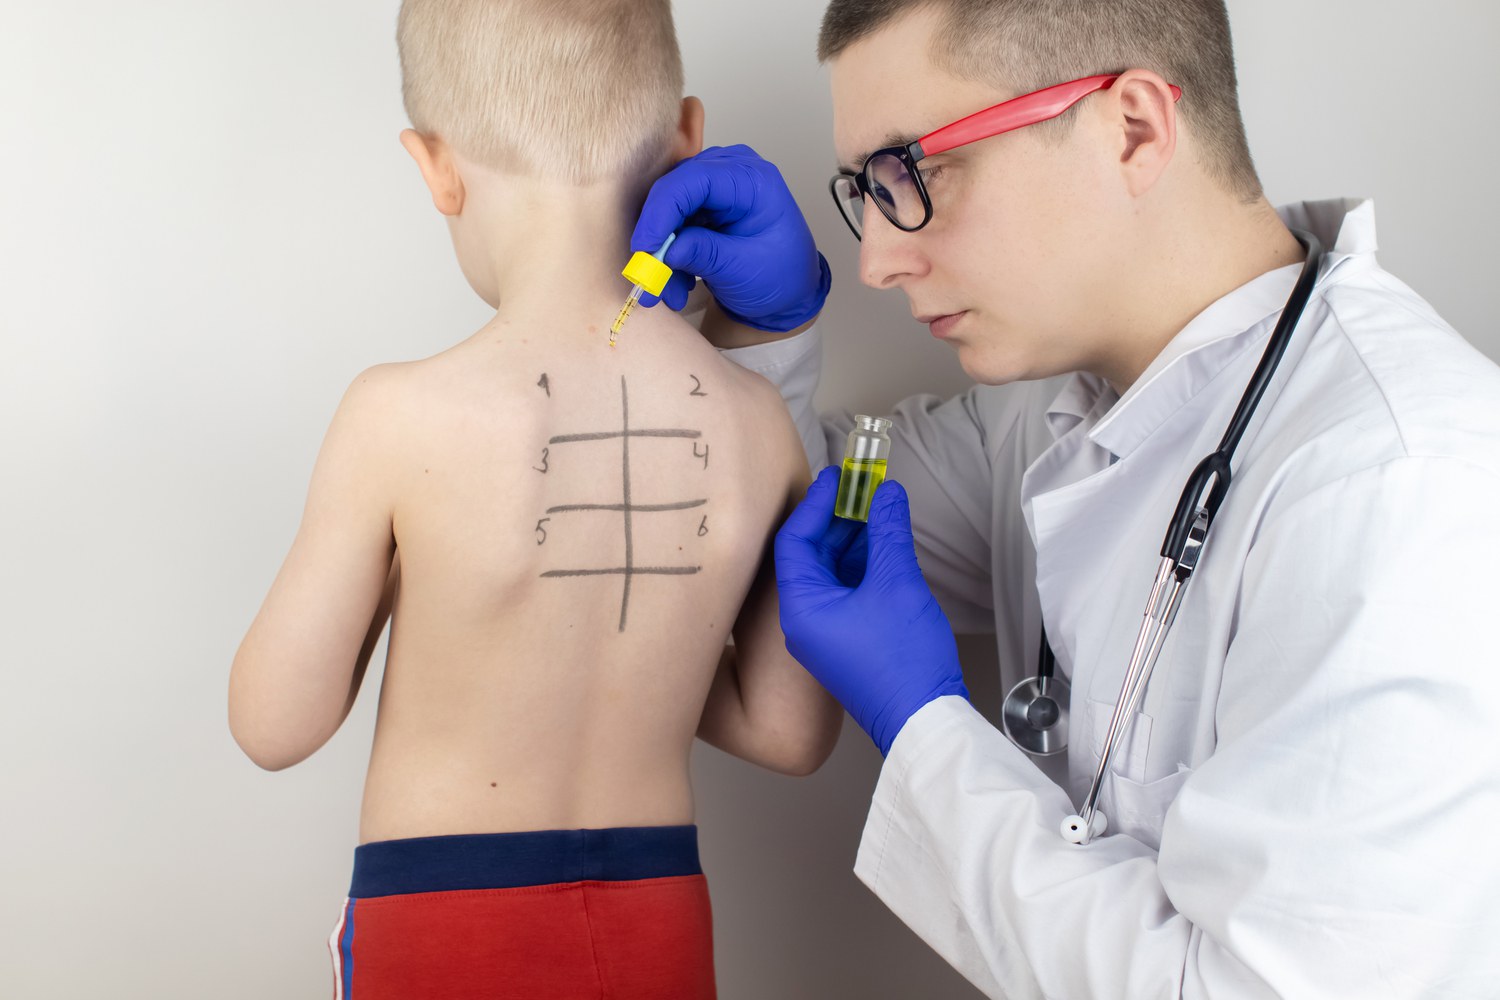 Procedure For a Skin Prick Test in Children